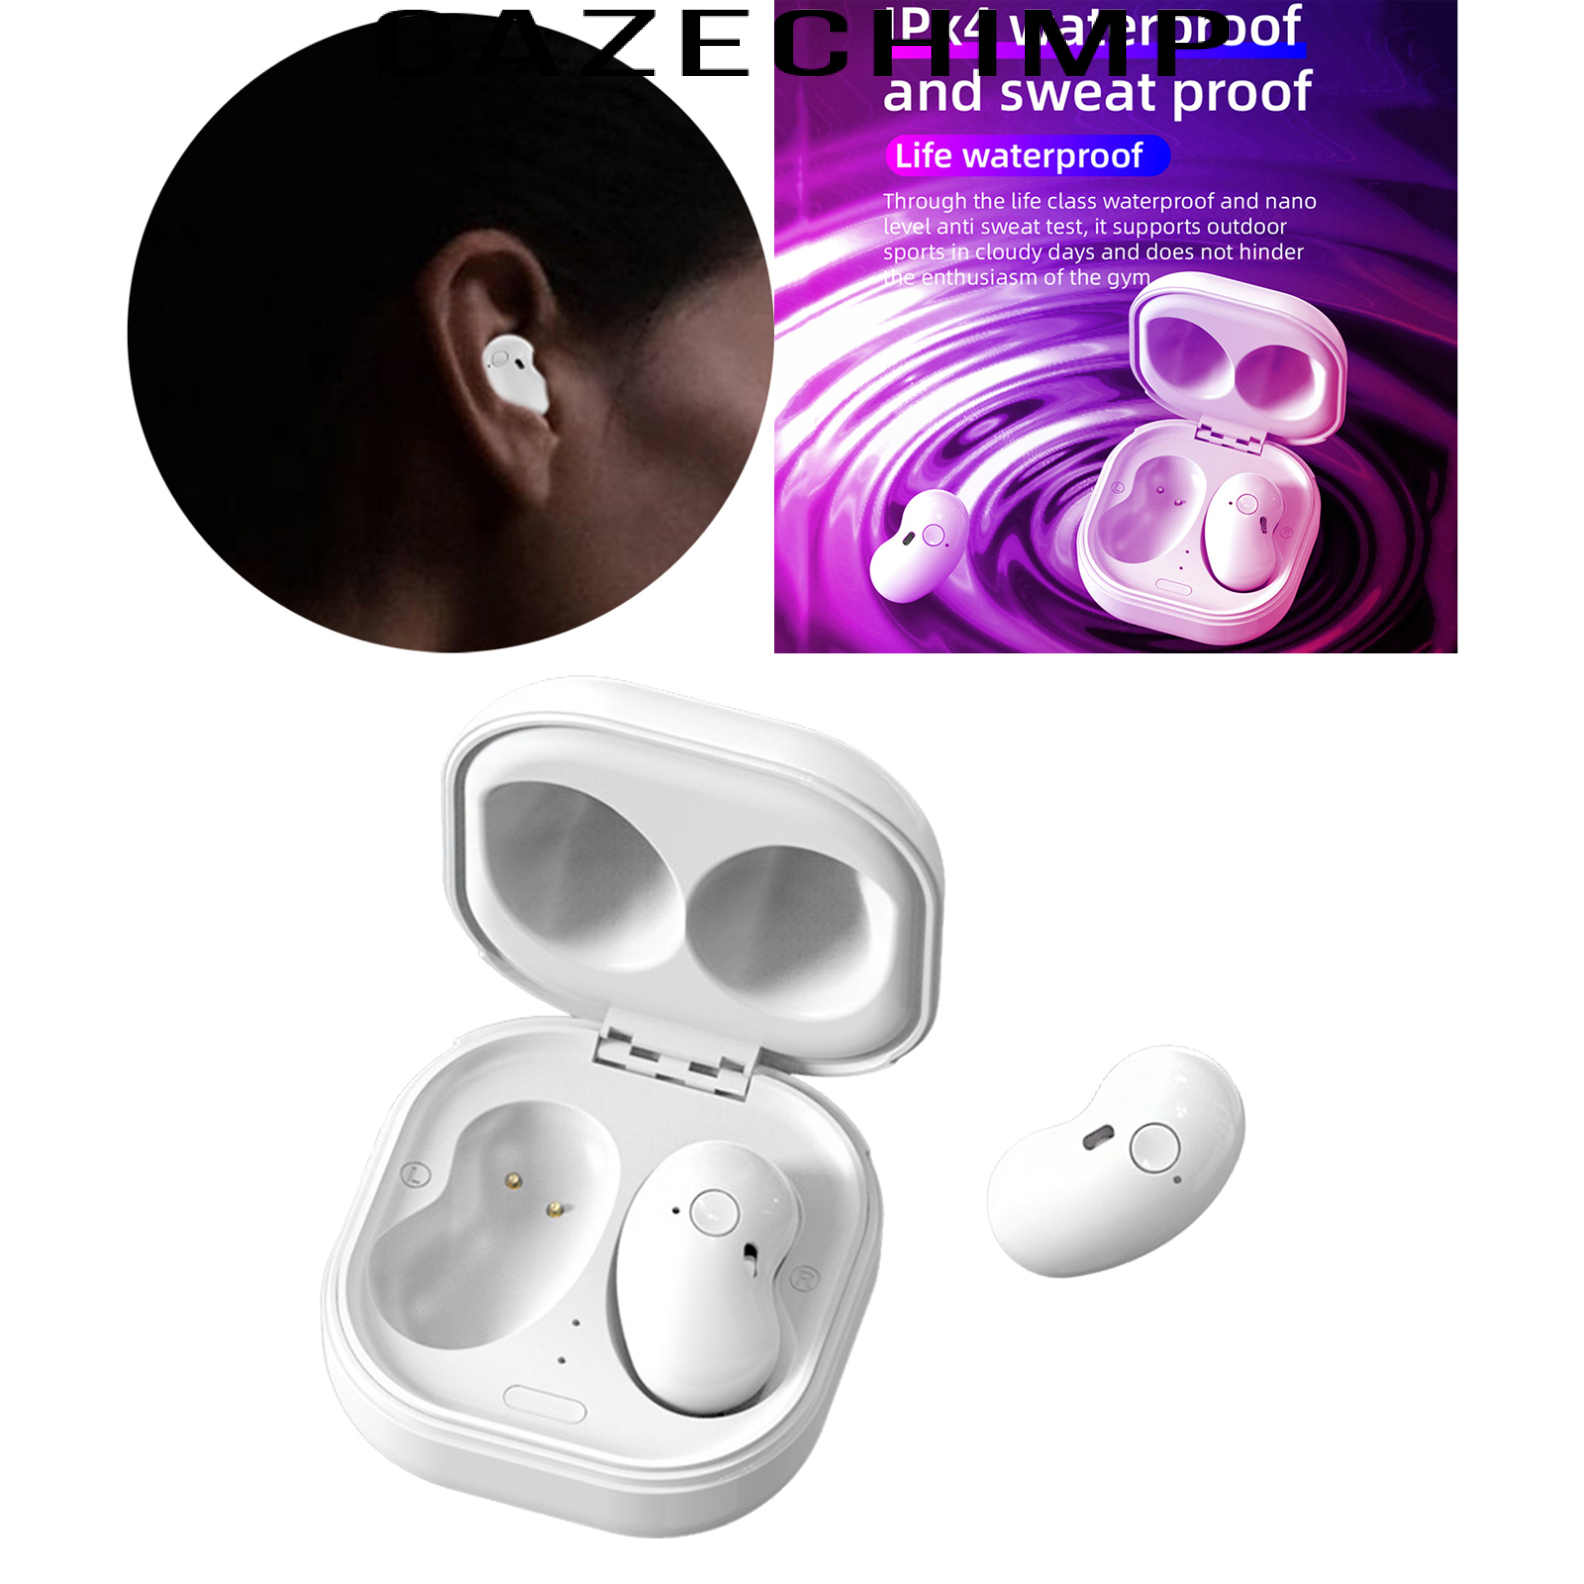 [GAZECHIMP]S6 TWS Bluetooth Earphones Wireless Headphone Binaural Call